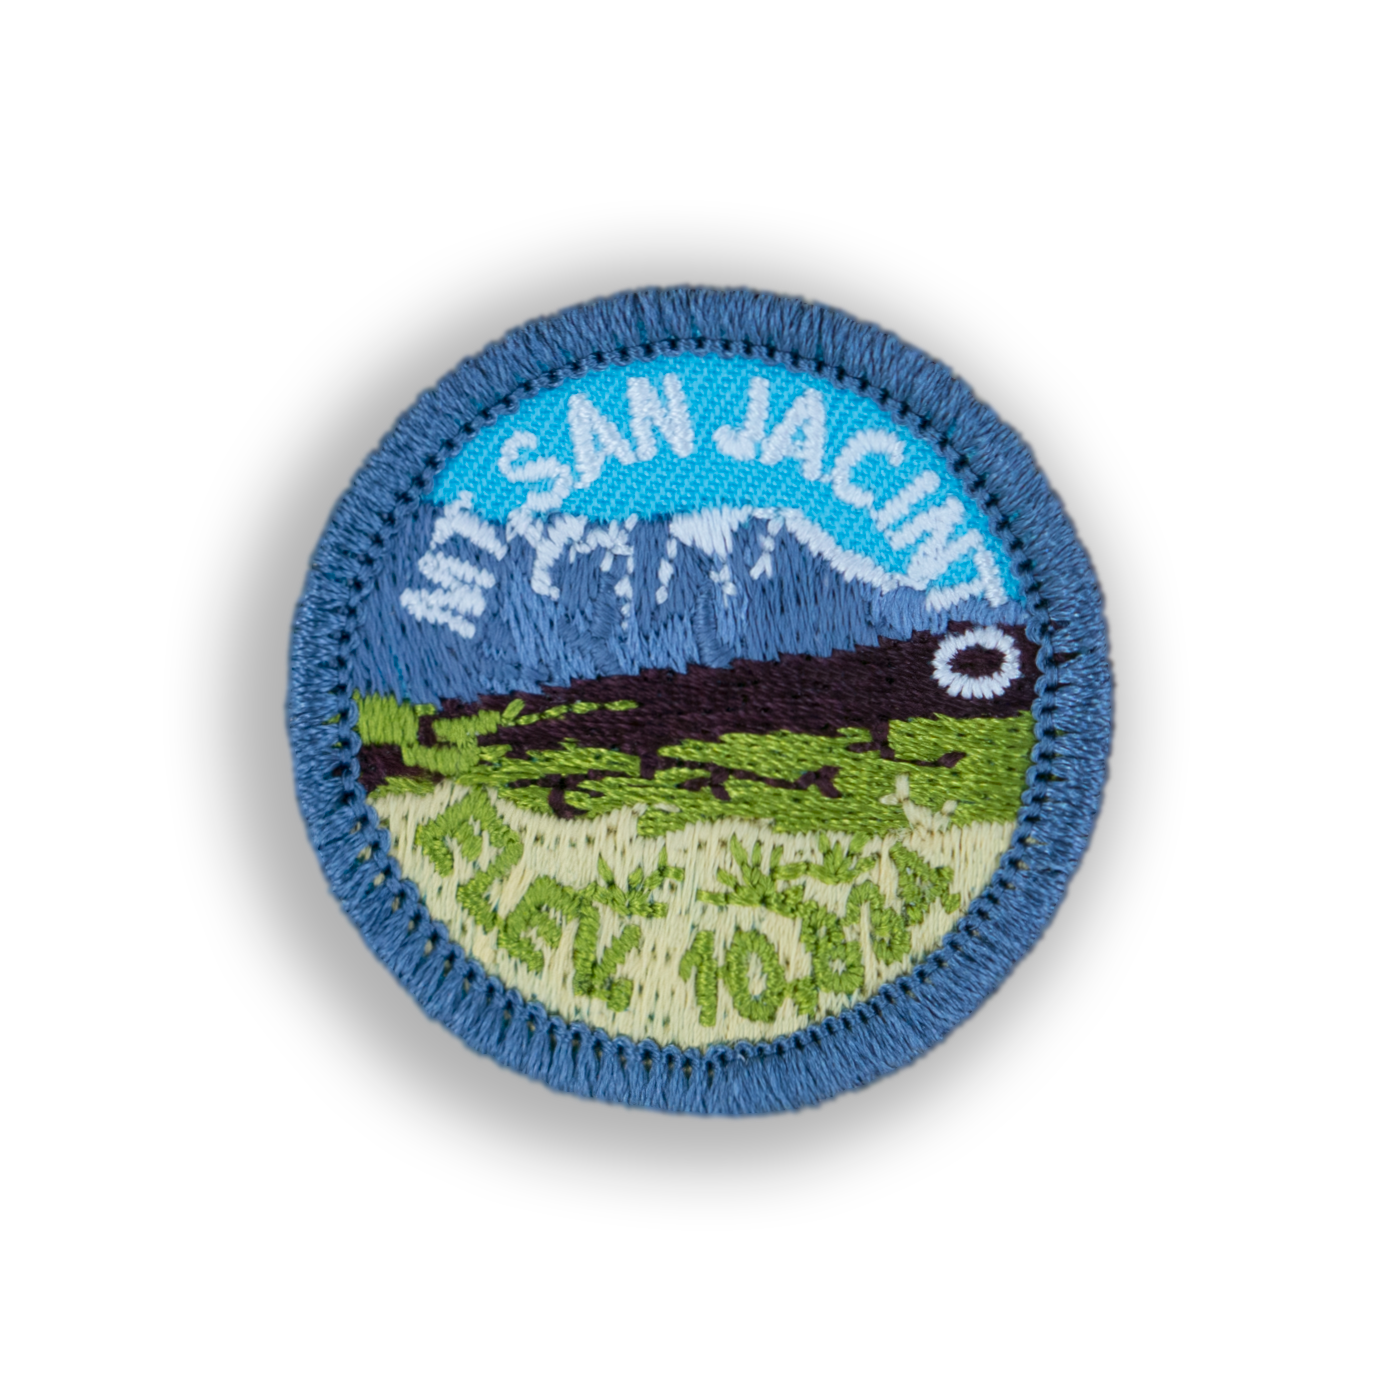 Mount San Jacinto Patch | Demerit Wear - Fake Merit Badges